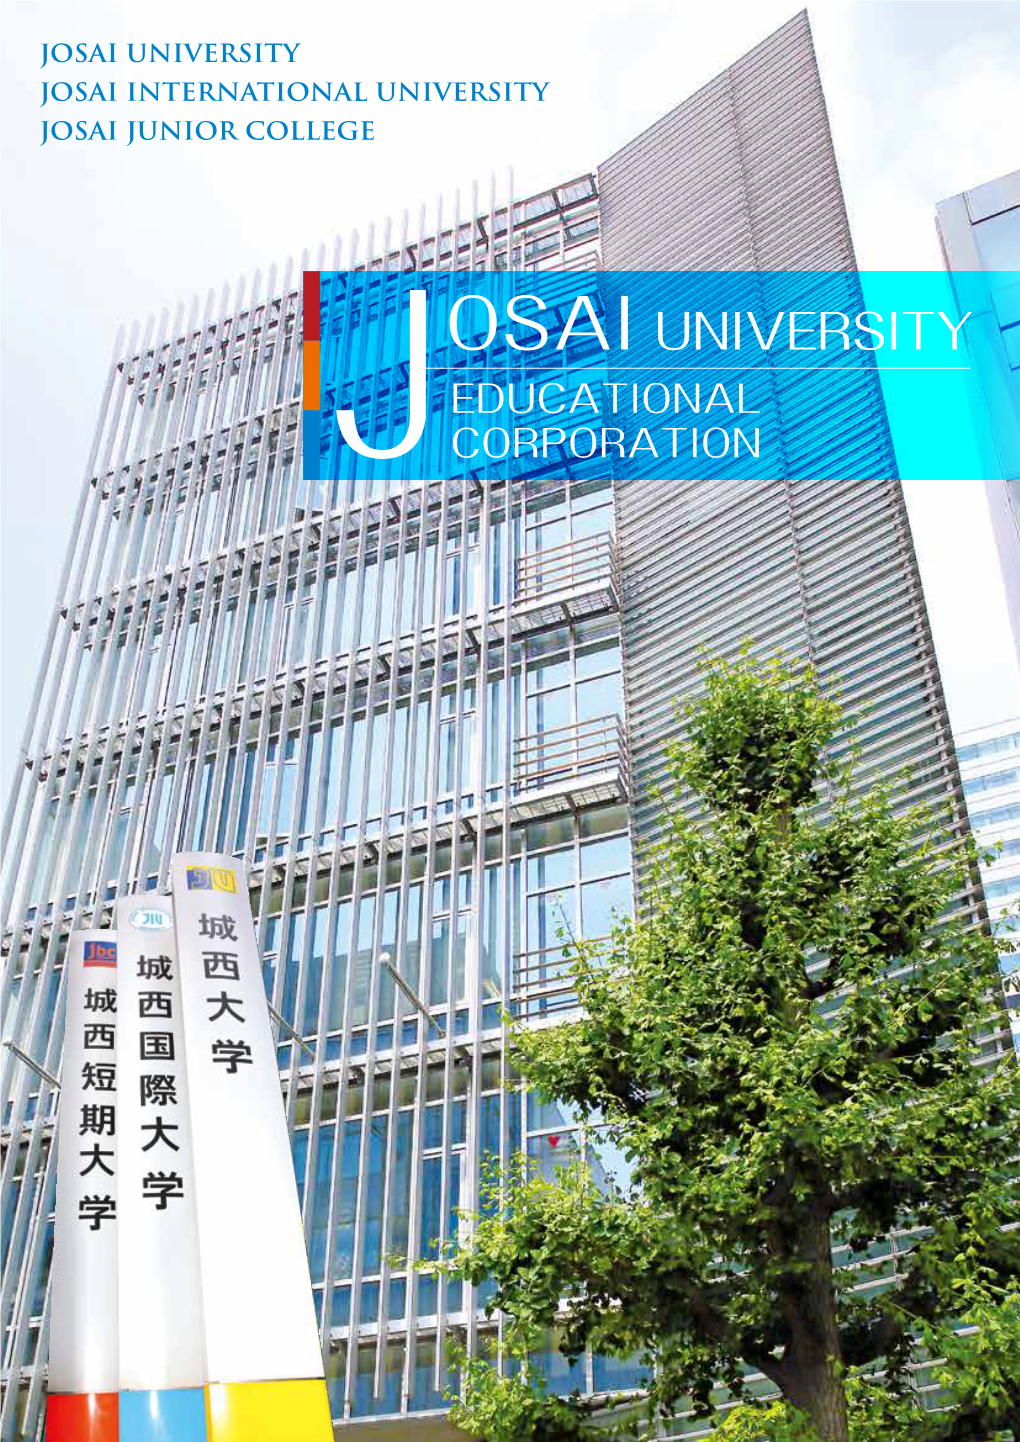 Osai University Josai International University Josai Junior College